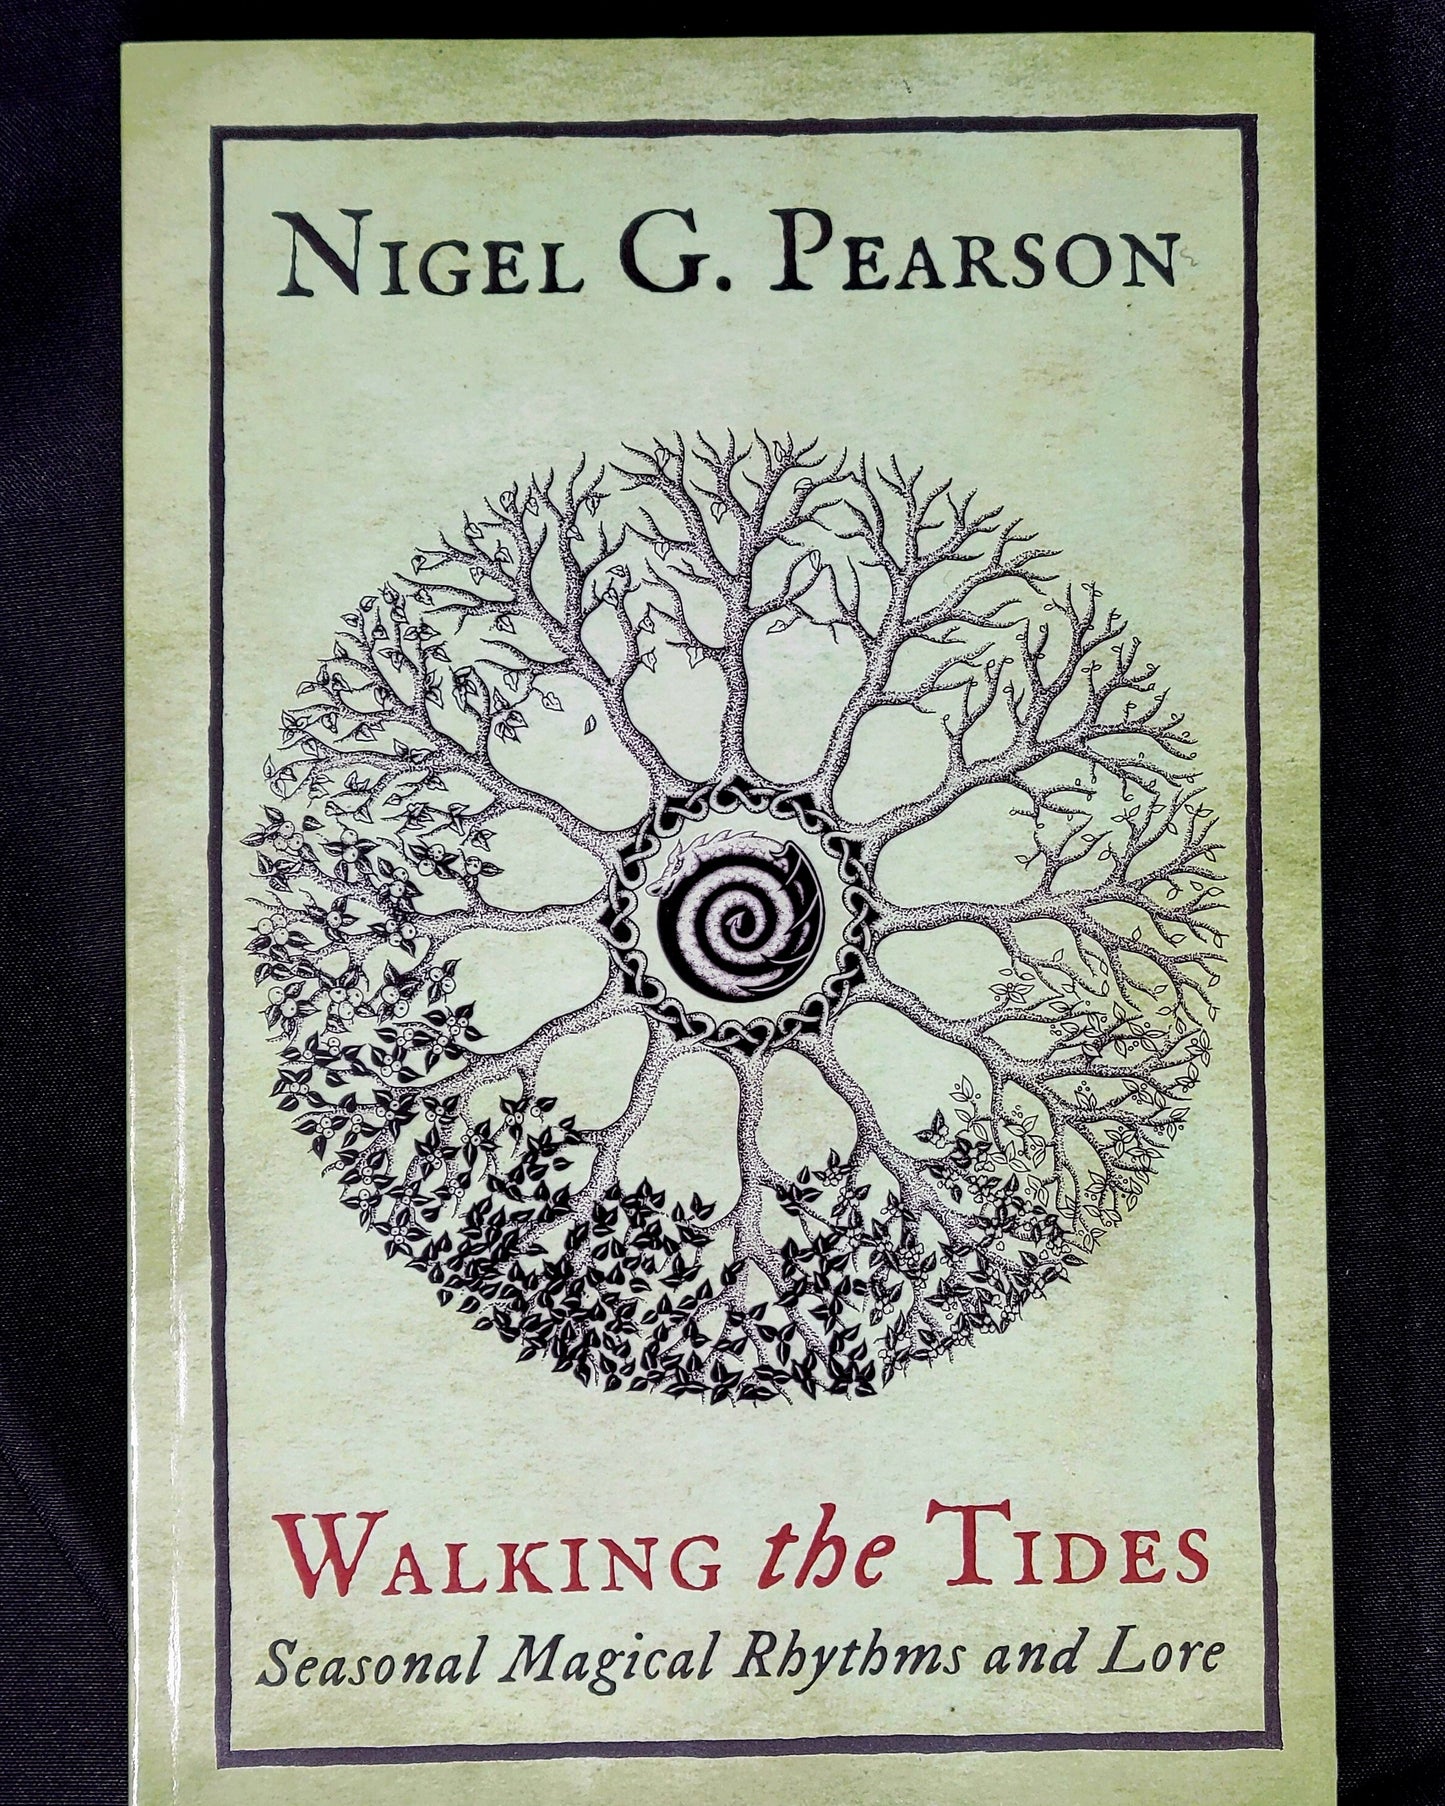 Walking the Tides Seasonal Magical Rhythms and Lore by Nigel G. Pearson